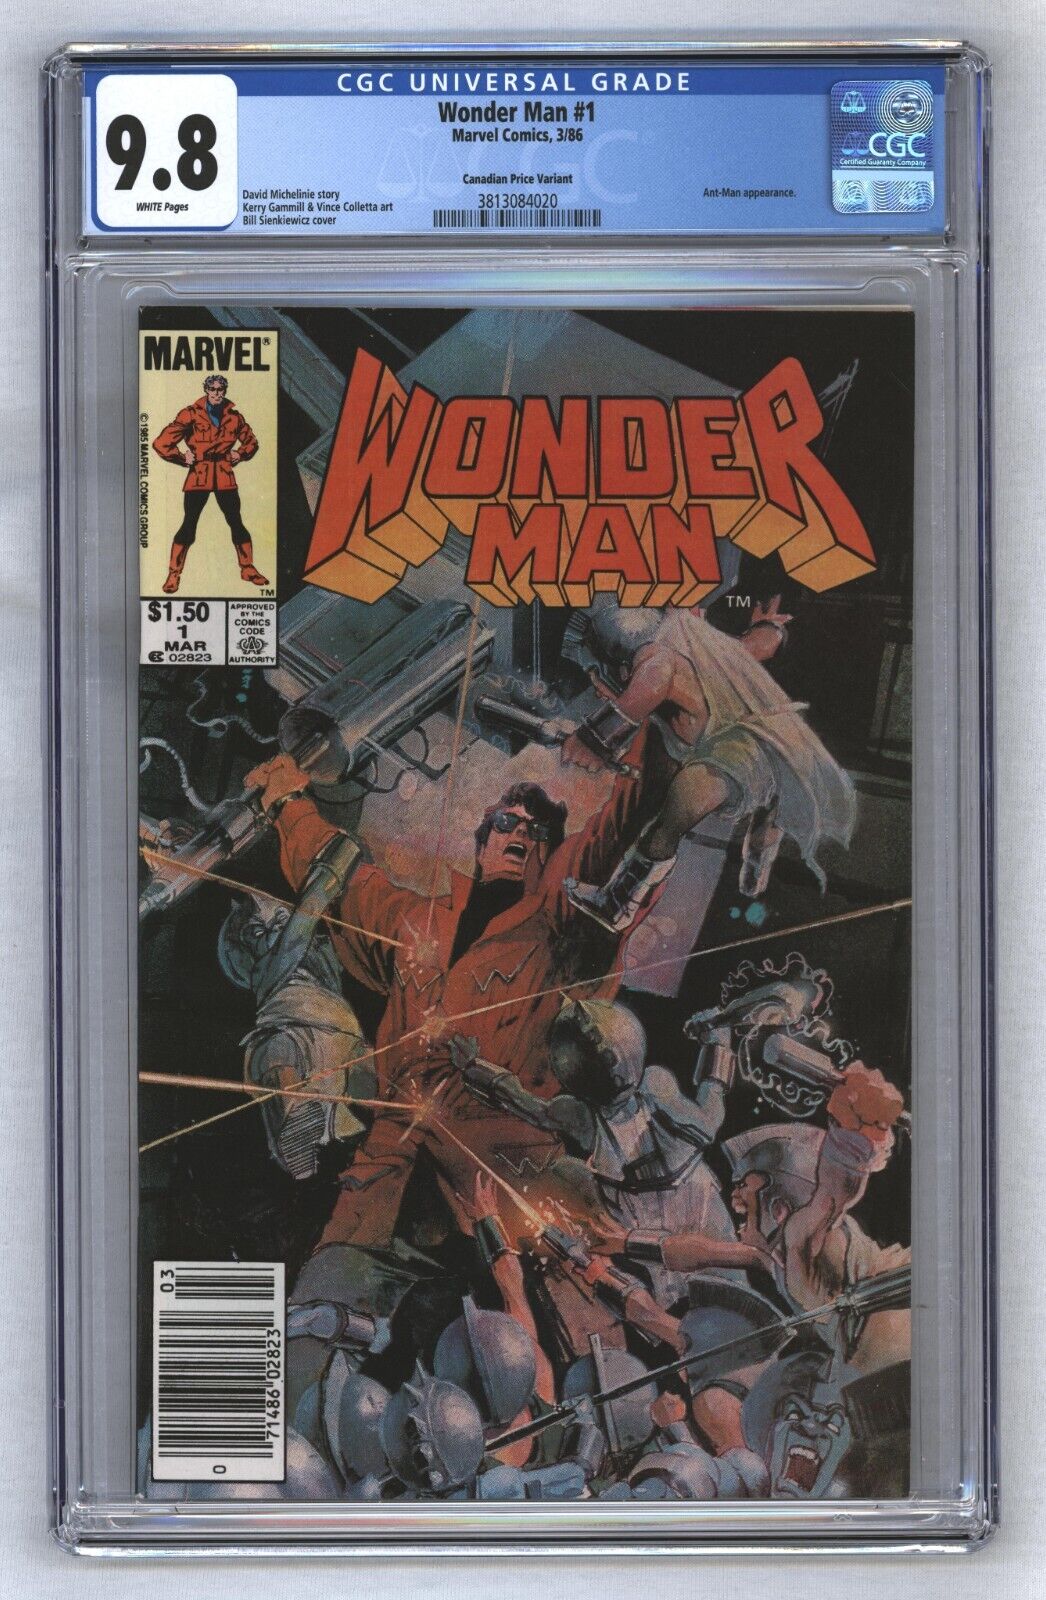 Wonder Man 1 Bill Sienkiewicz 1 of 1 Canadian Price Variant 1986 CGC 98